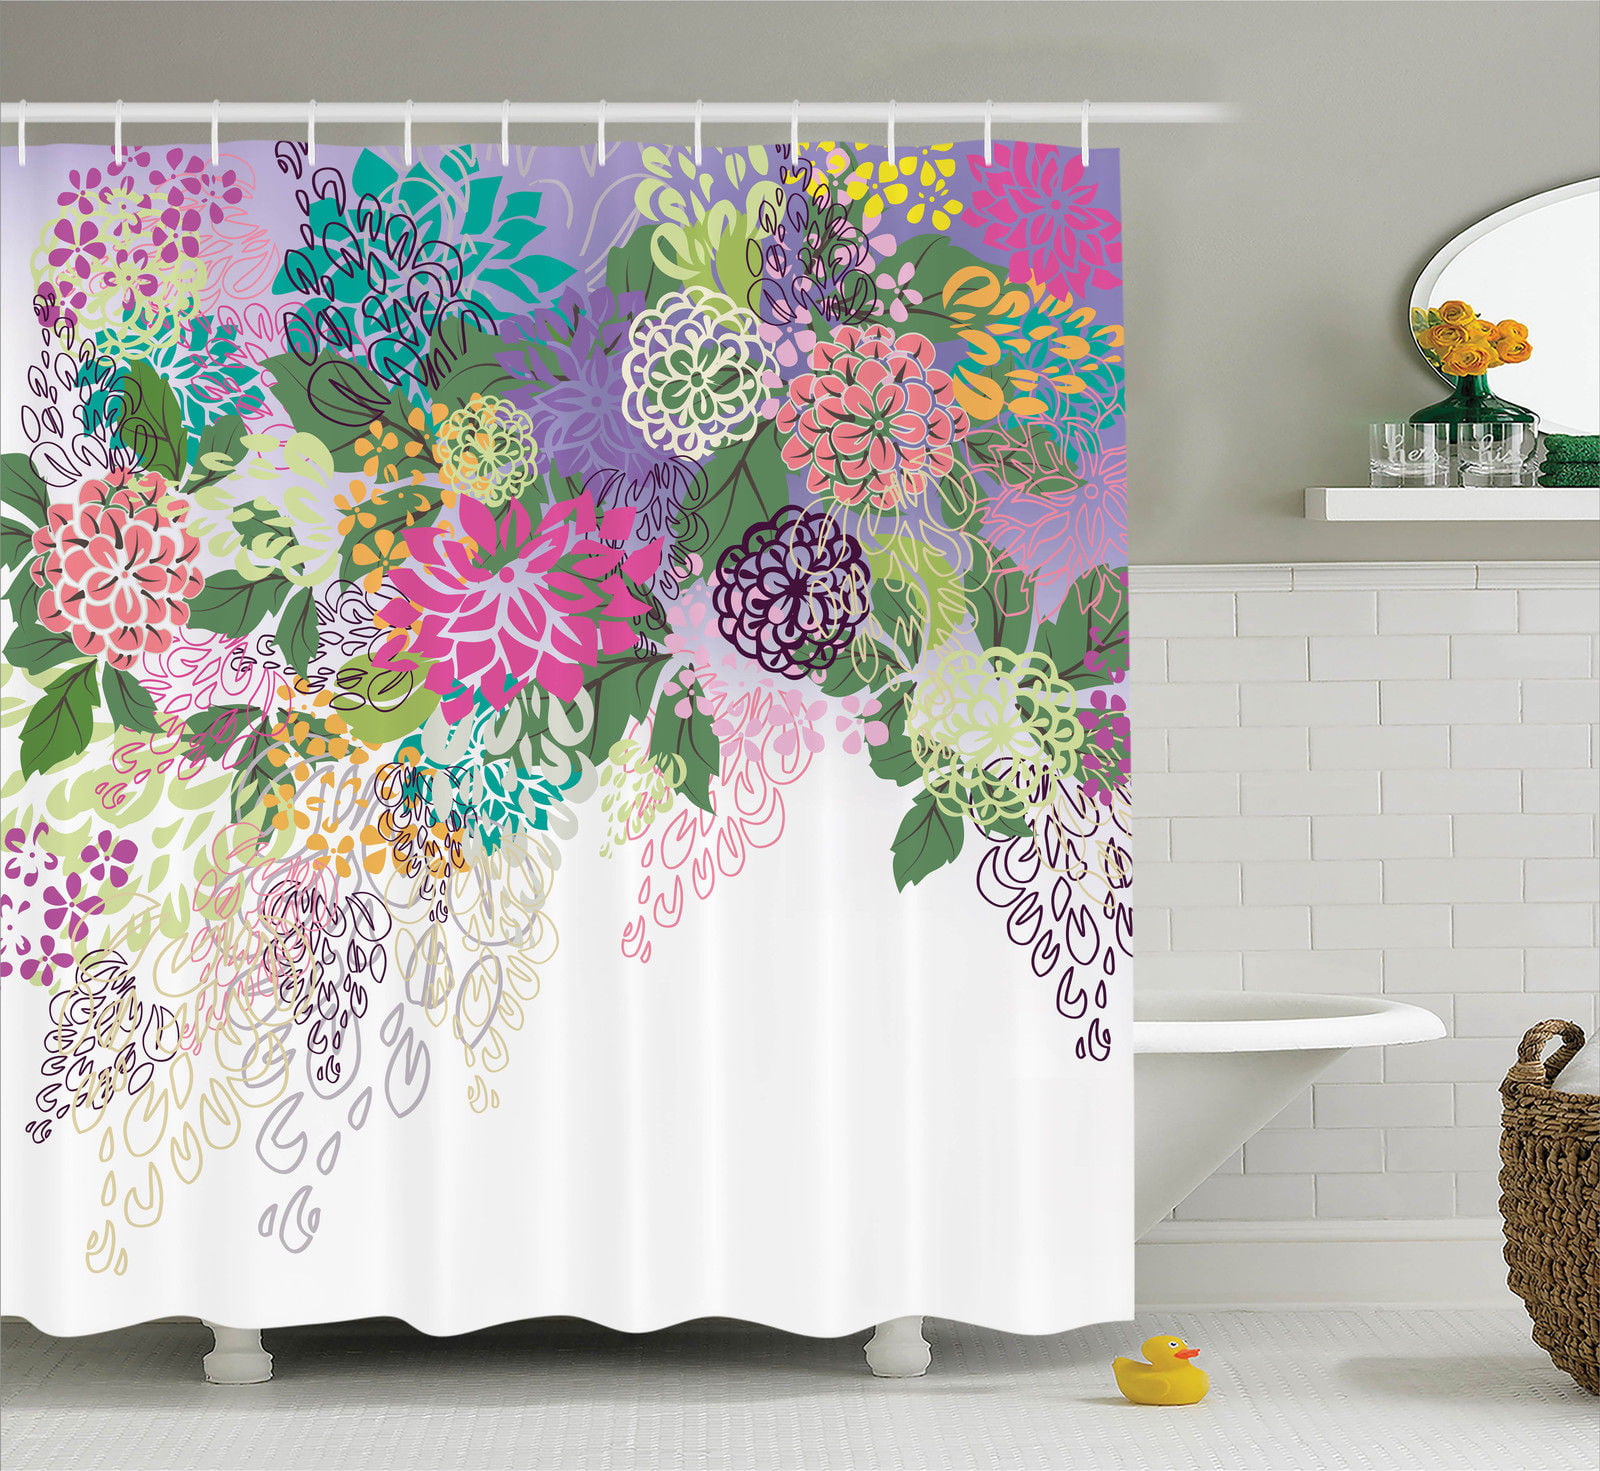 Details about   Floral Shower Curtain Spring Romantic Design Print for Bathroom 